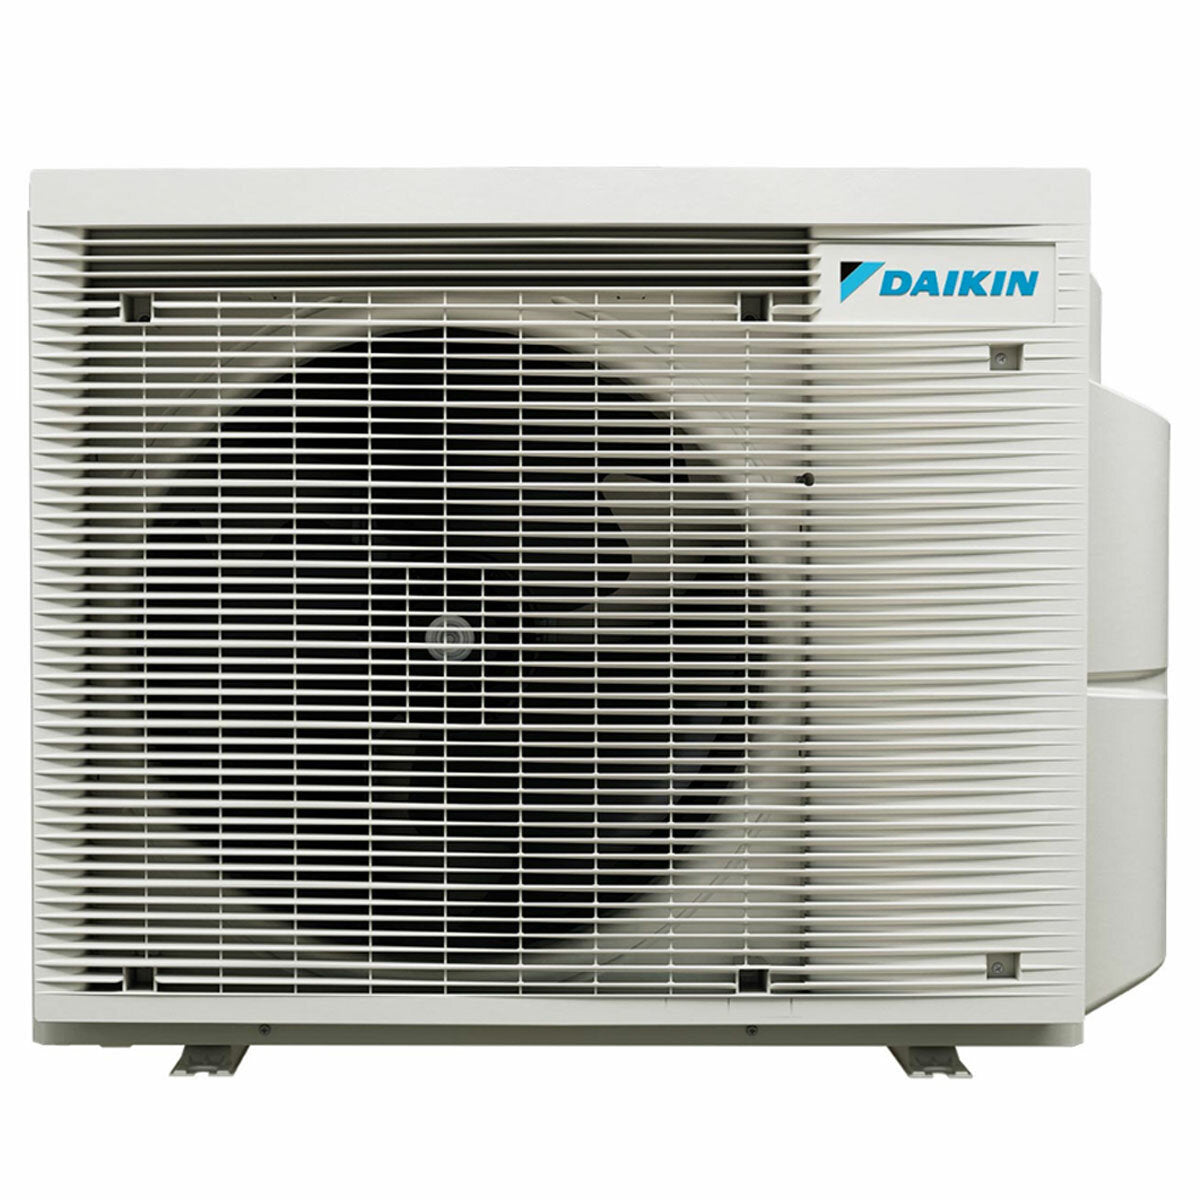 Daikin Mini Sky FDXM-F9 ducted air conditioner trial split 9000+12000+18000 BTU inverter A++ external 9 kW